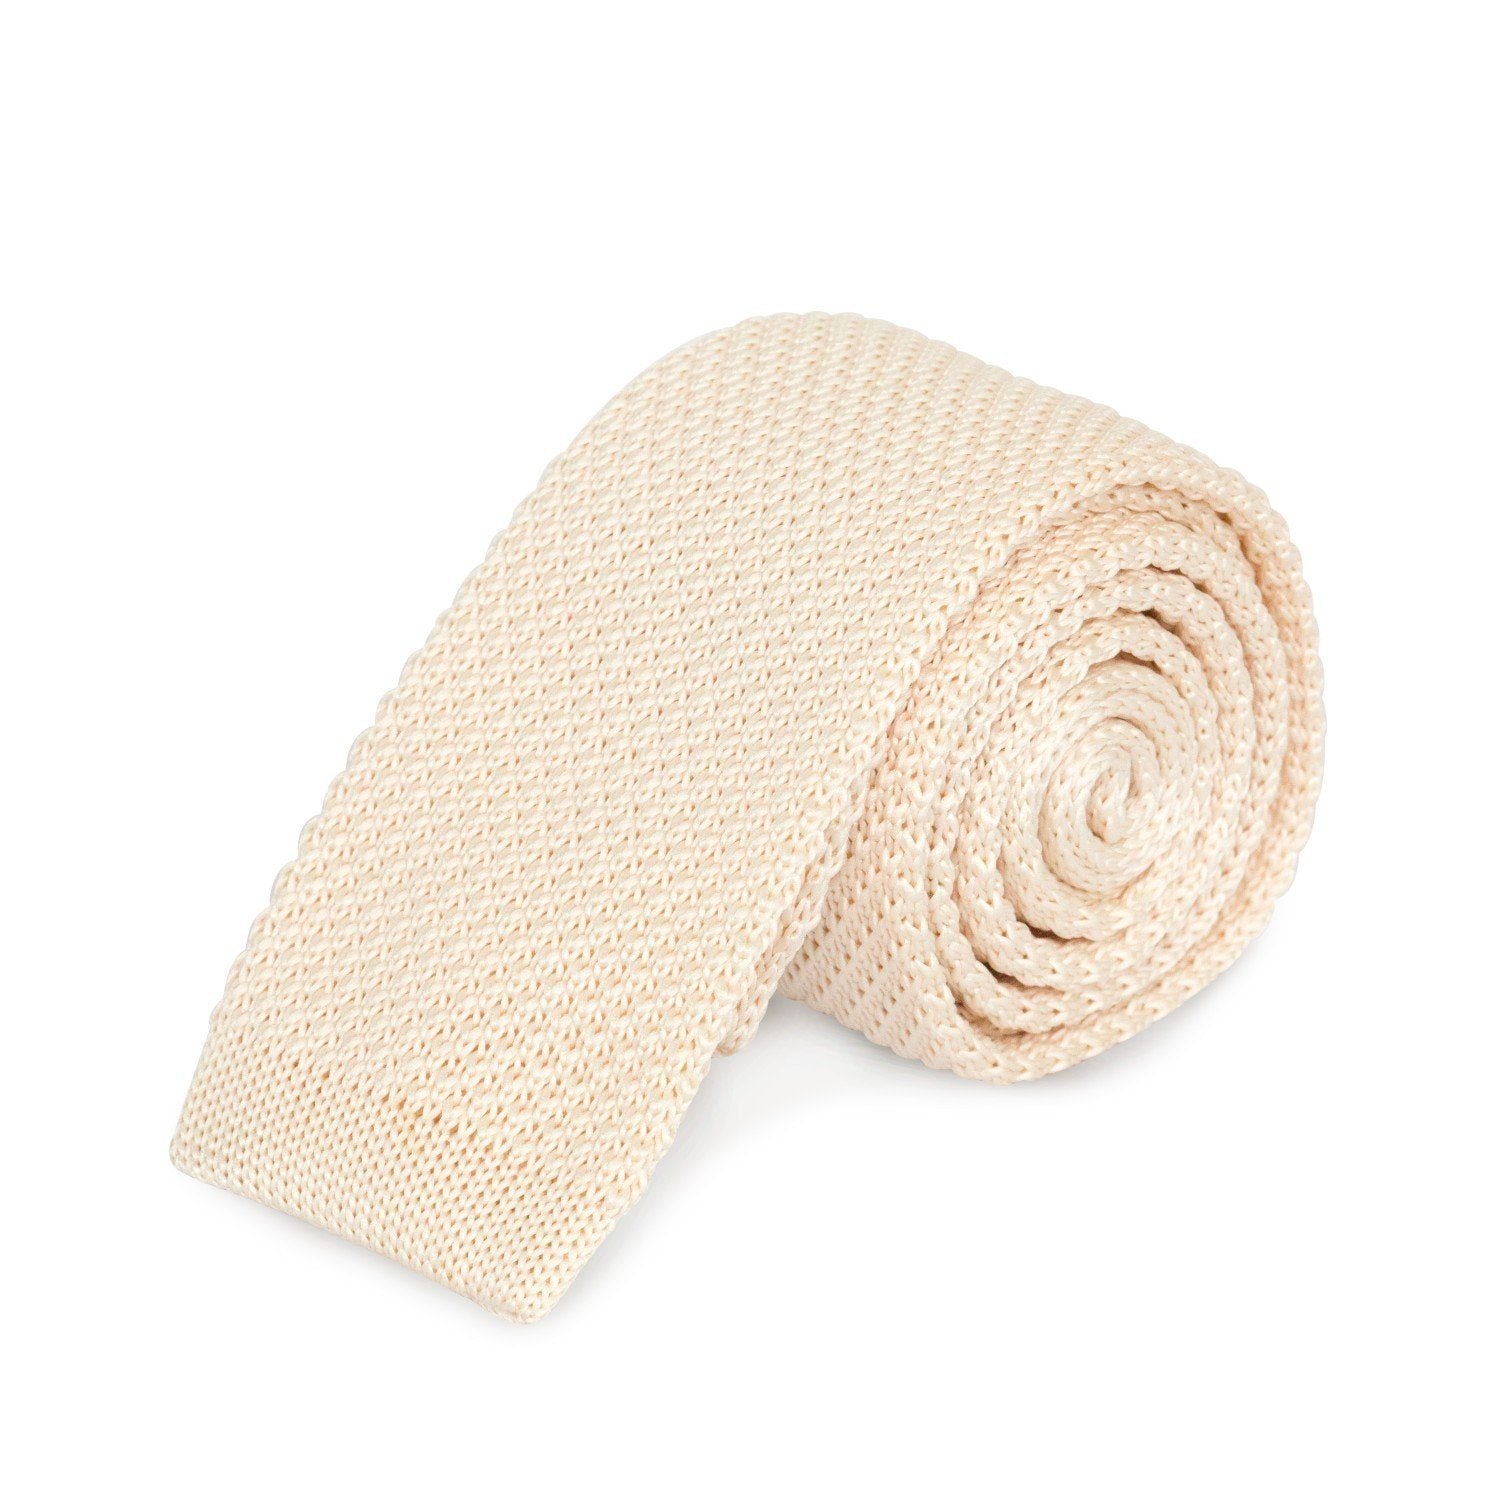 Cream Knit Tie Ties Cuffed.com.au 